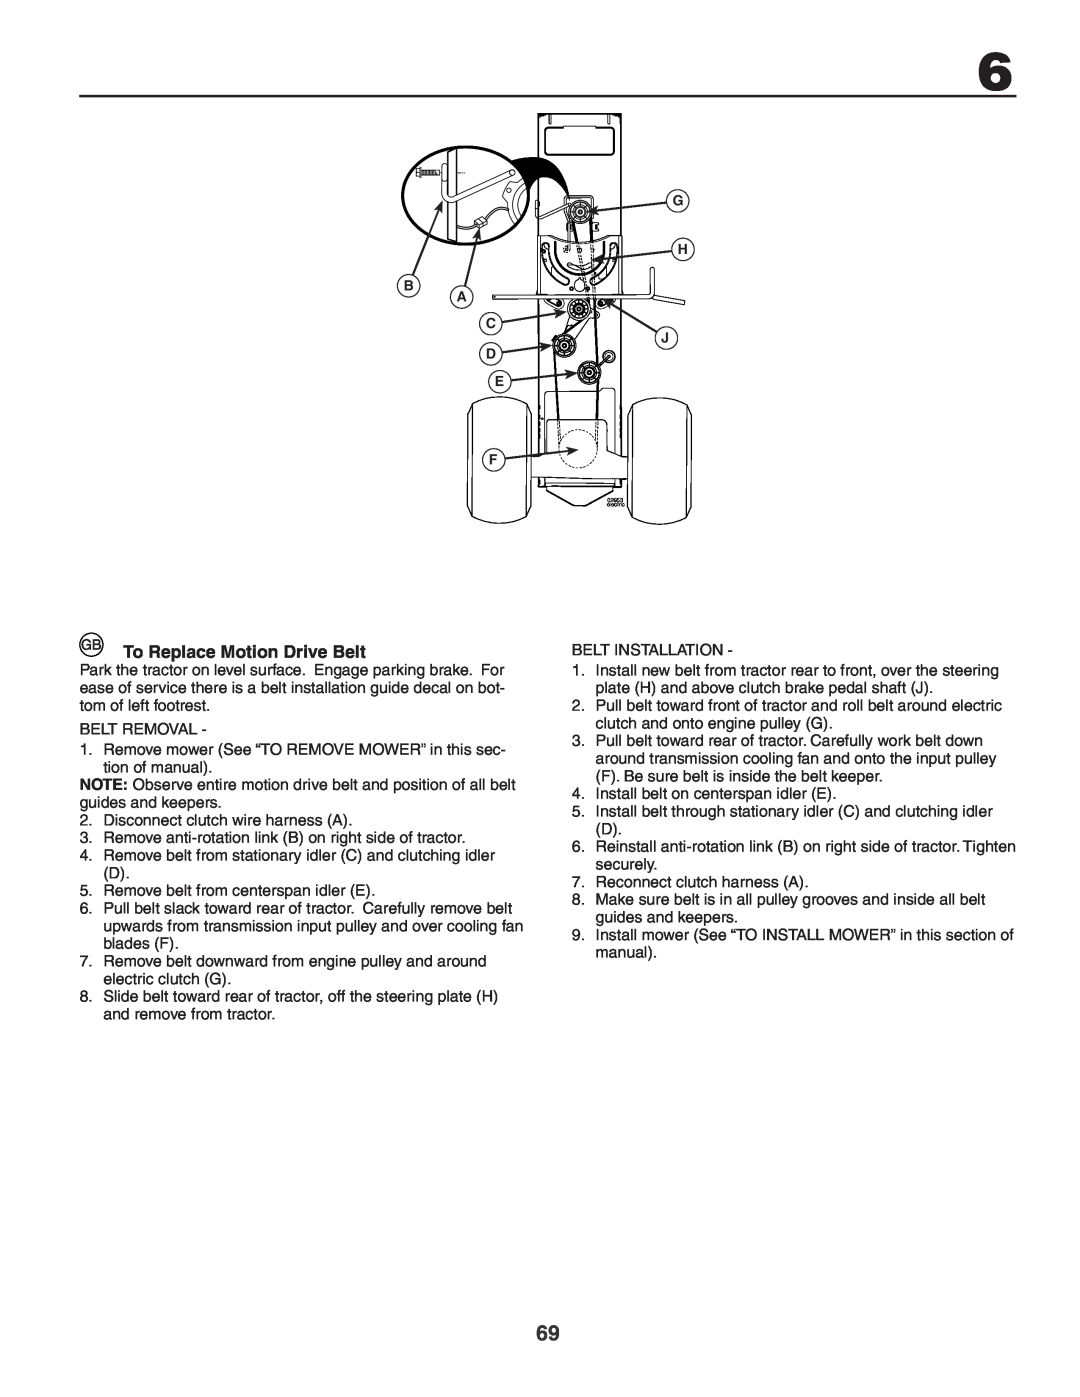 Husqvarna GTH260XP instruction manual To Replace Motion Drive Belt 